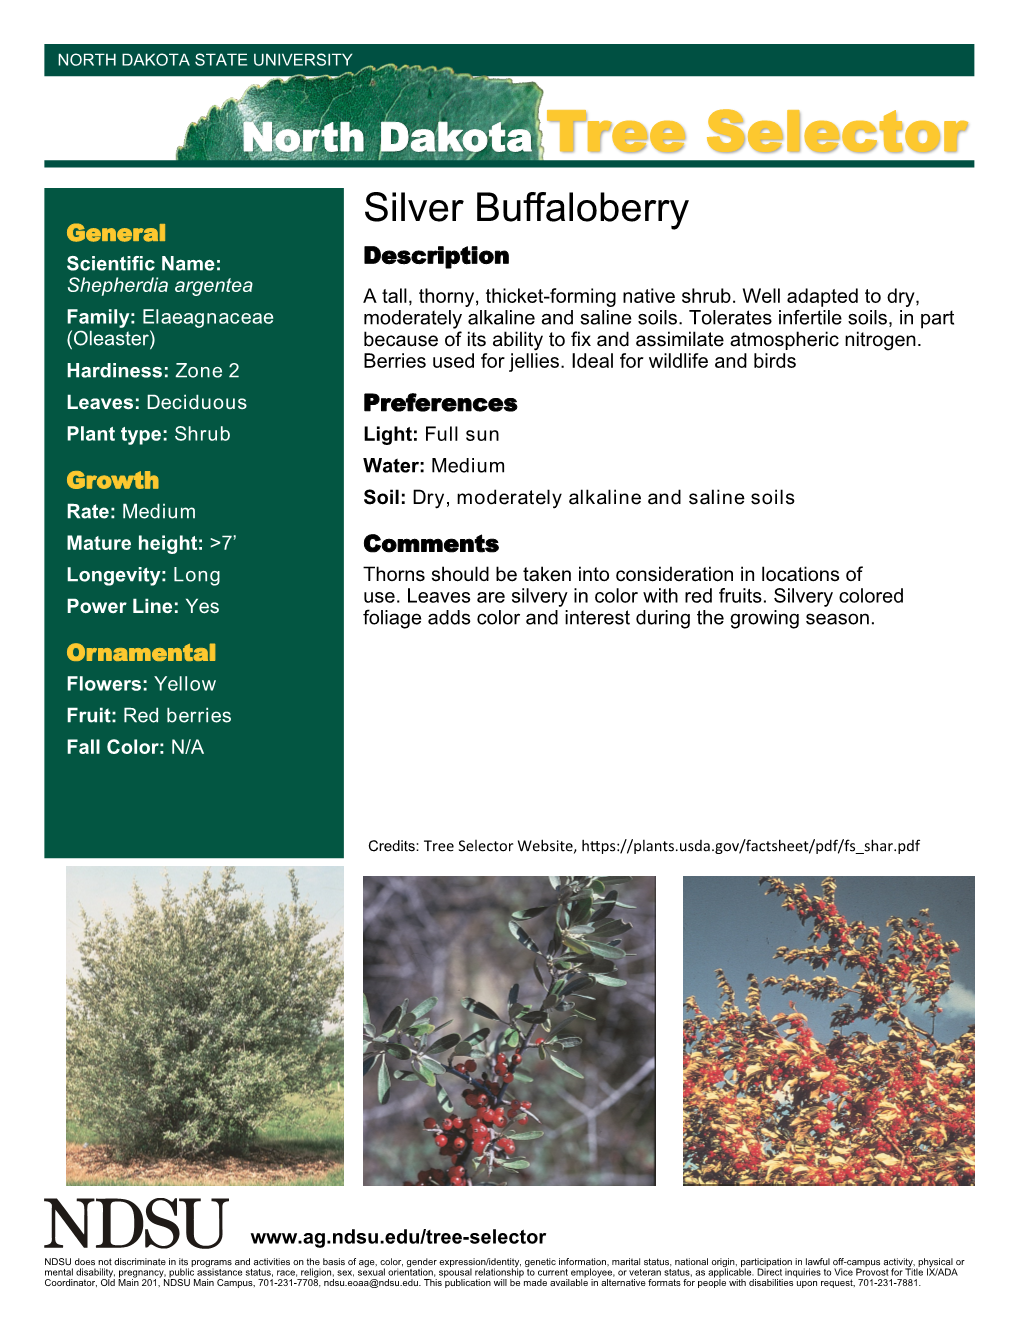 North Dakota Tree Selector Silver Buffaloberry General Scientific Name: Description Shepherdia Argentea a Tall, Thorny, Thicket-Forming Native Shrub